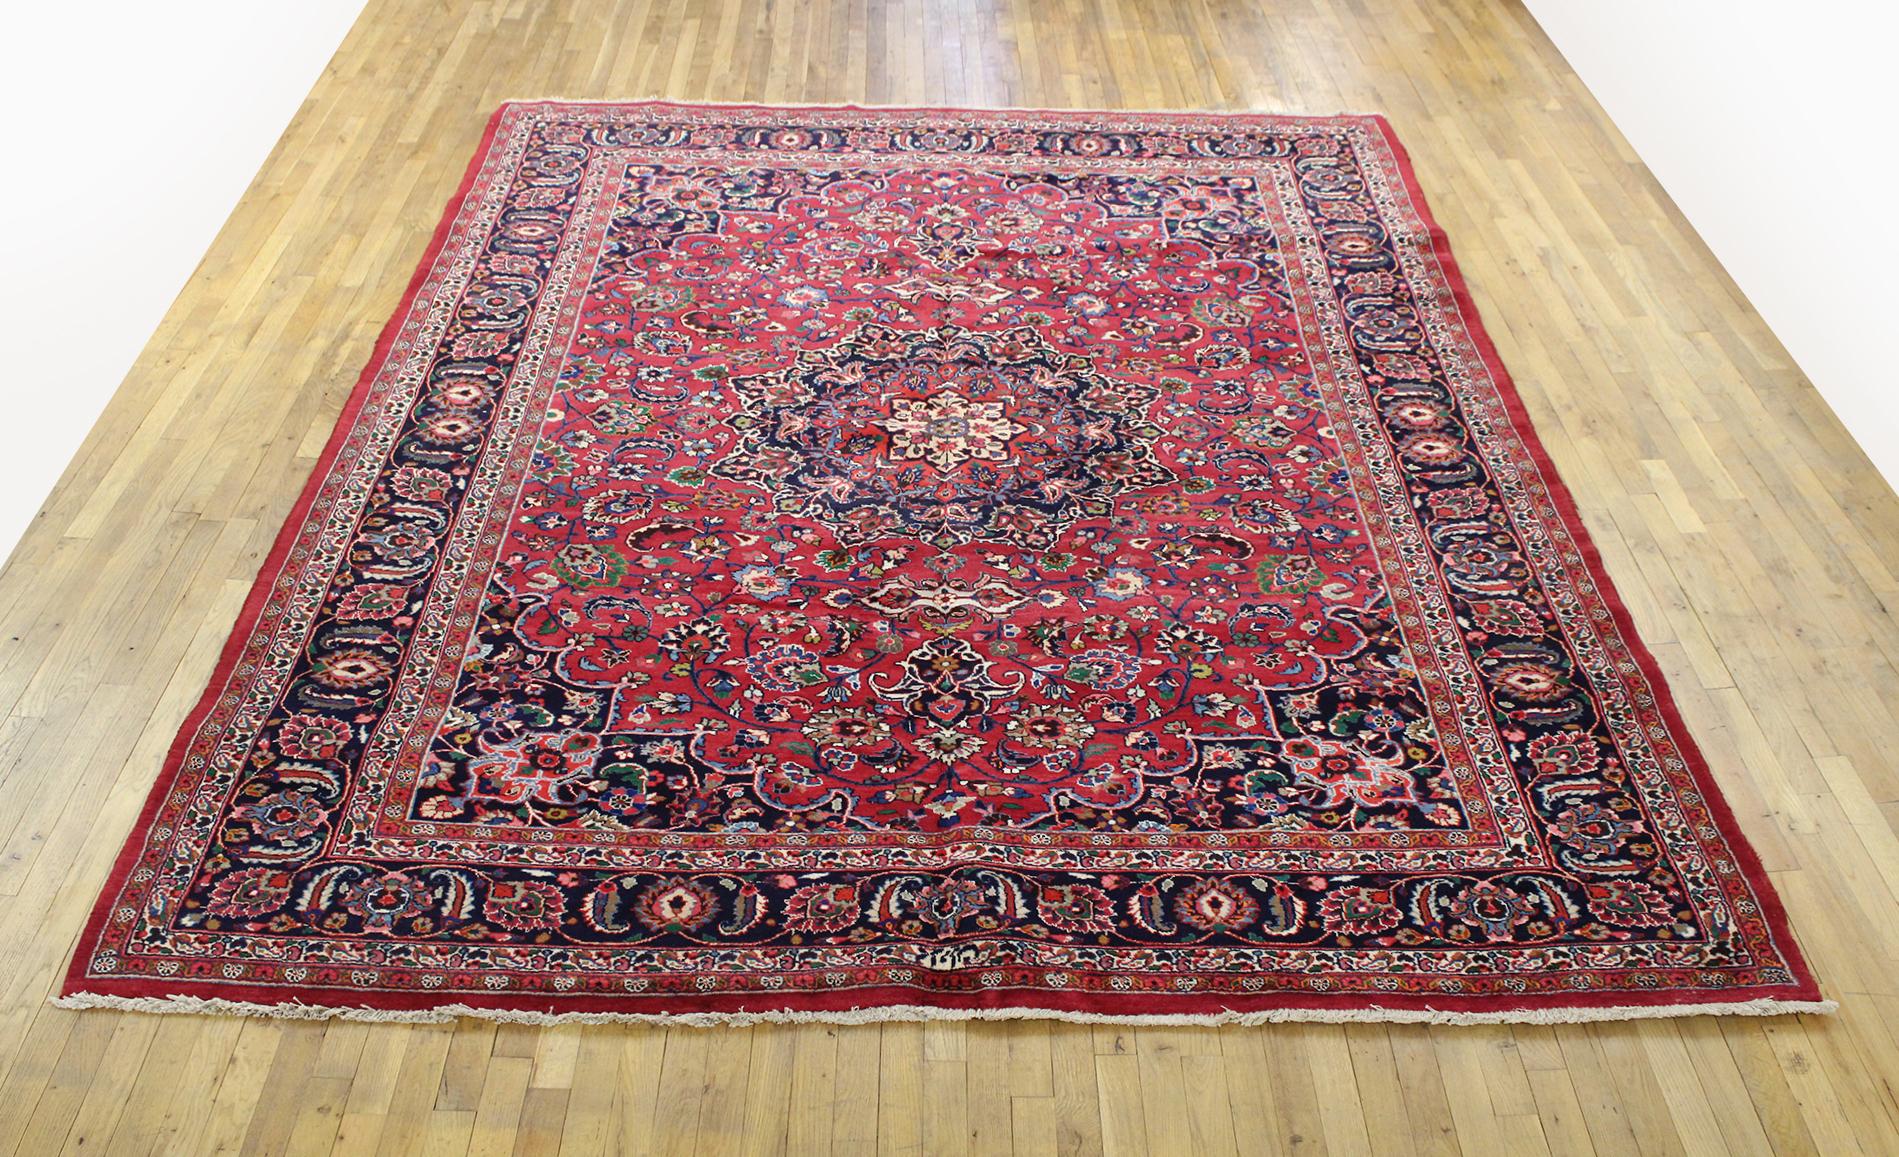 Vintage Persian Meshed Oriental Rug, Room size

A vintage Persian Meshed oriental rug, size 11'3